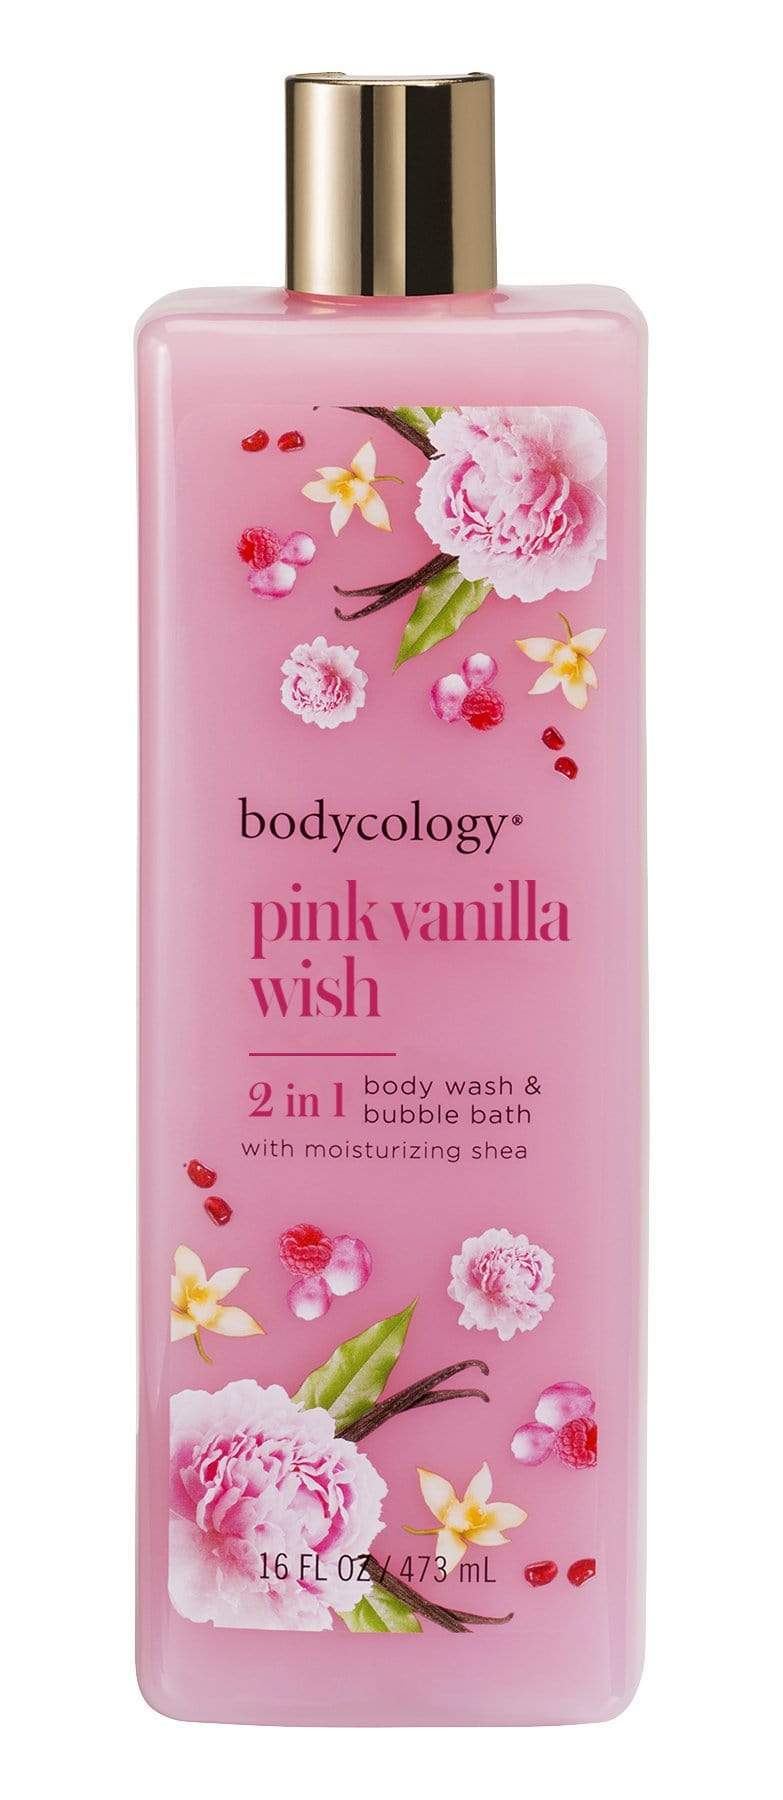 BODYCOLOGY PINK Vanilla WISH Moisturizing Body Wash Shower gel 473 ml103913CT - Jashanmal Home